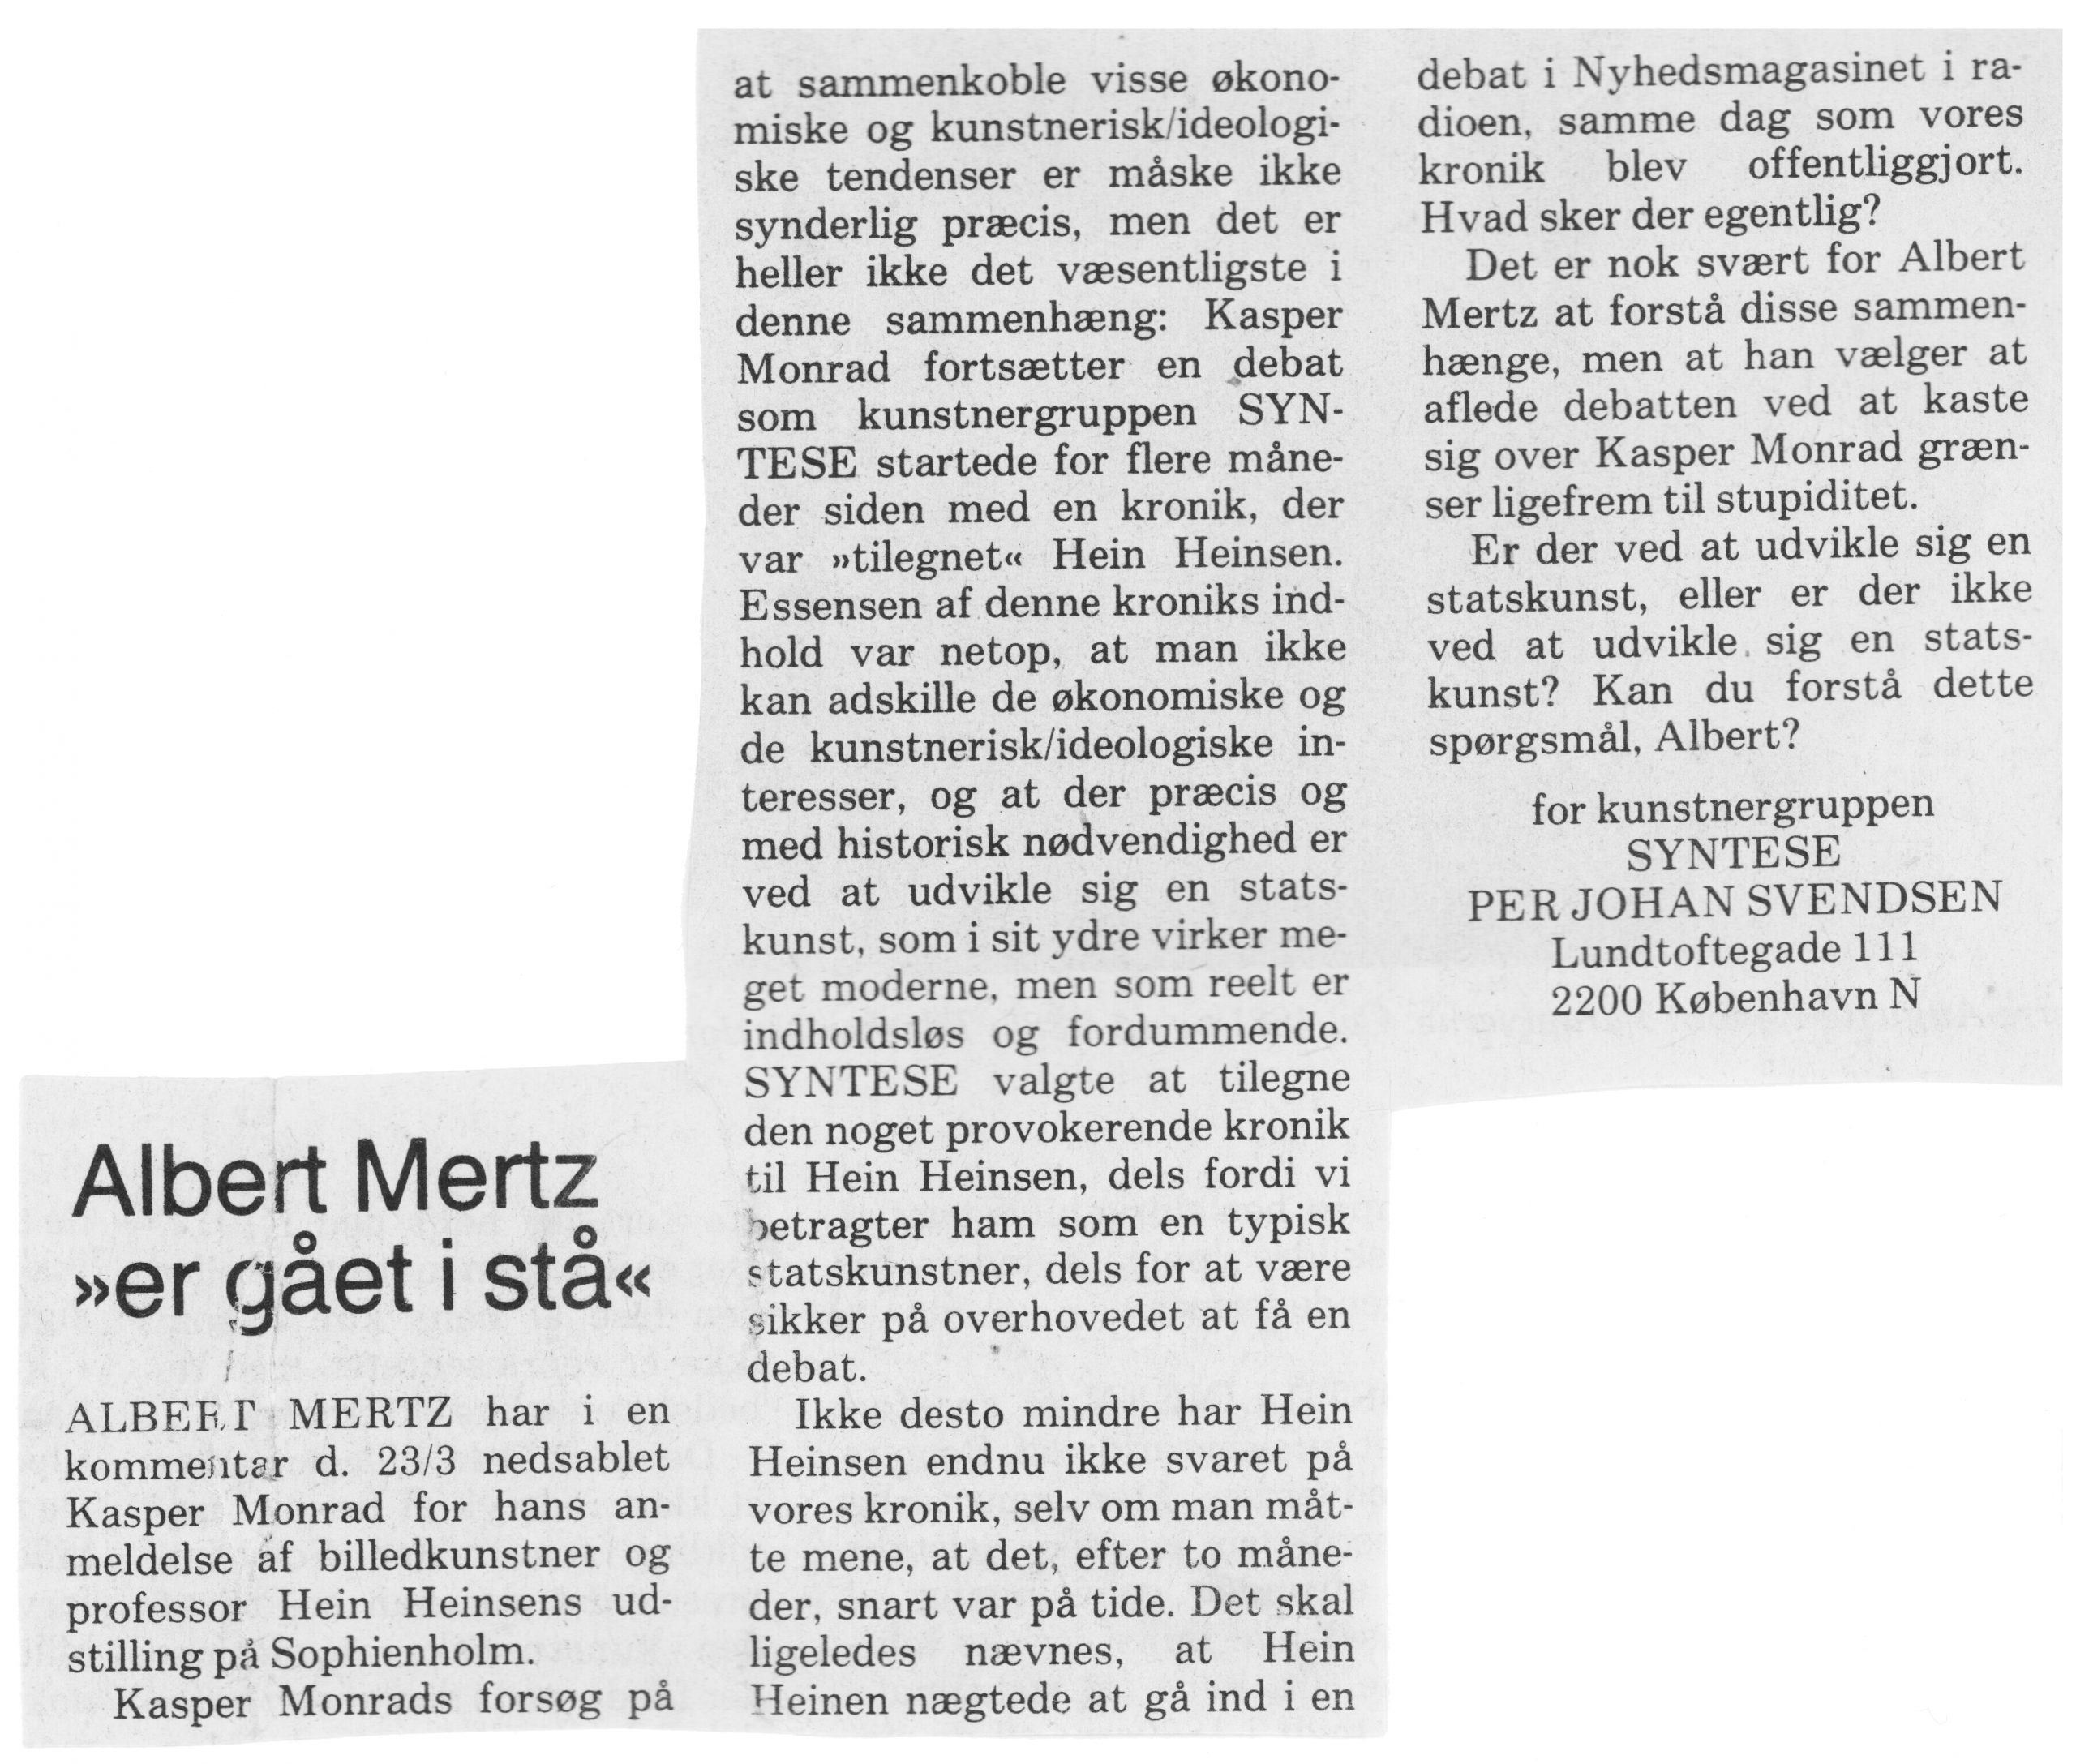 Albert Mertz er gået i stå. Debatindlæg (Den kunstneriske højrebølge). Per Johan Svendsen. Information. Medio april 1985.